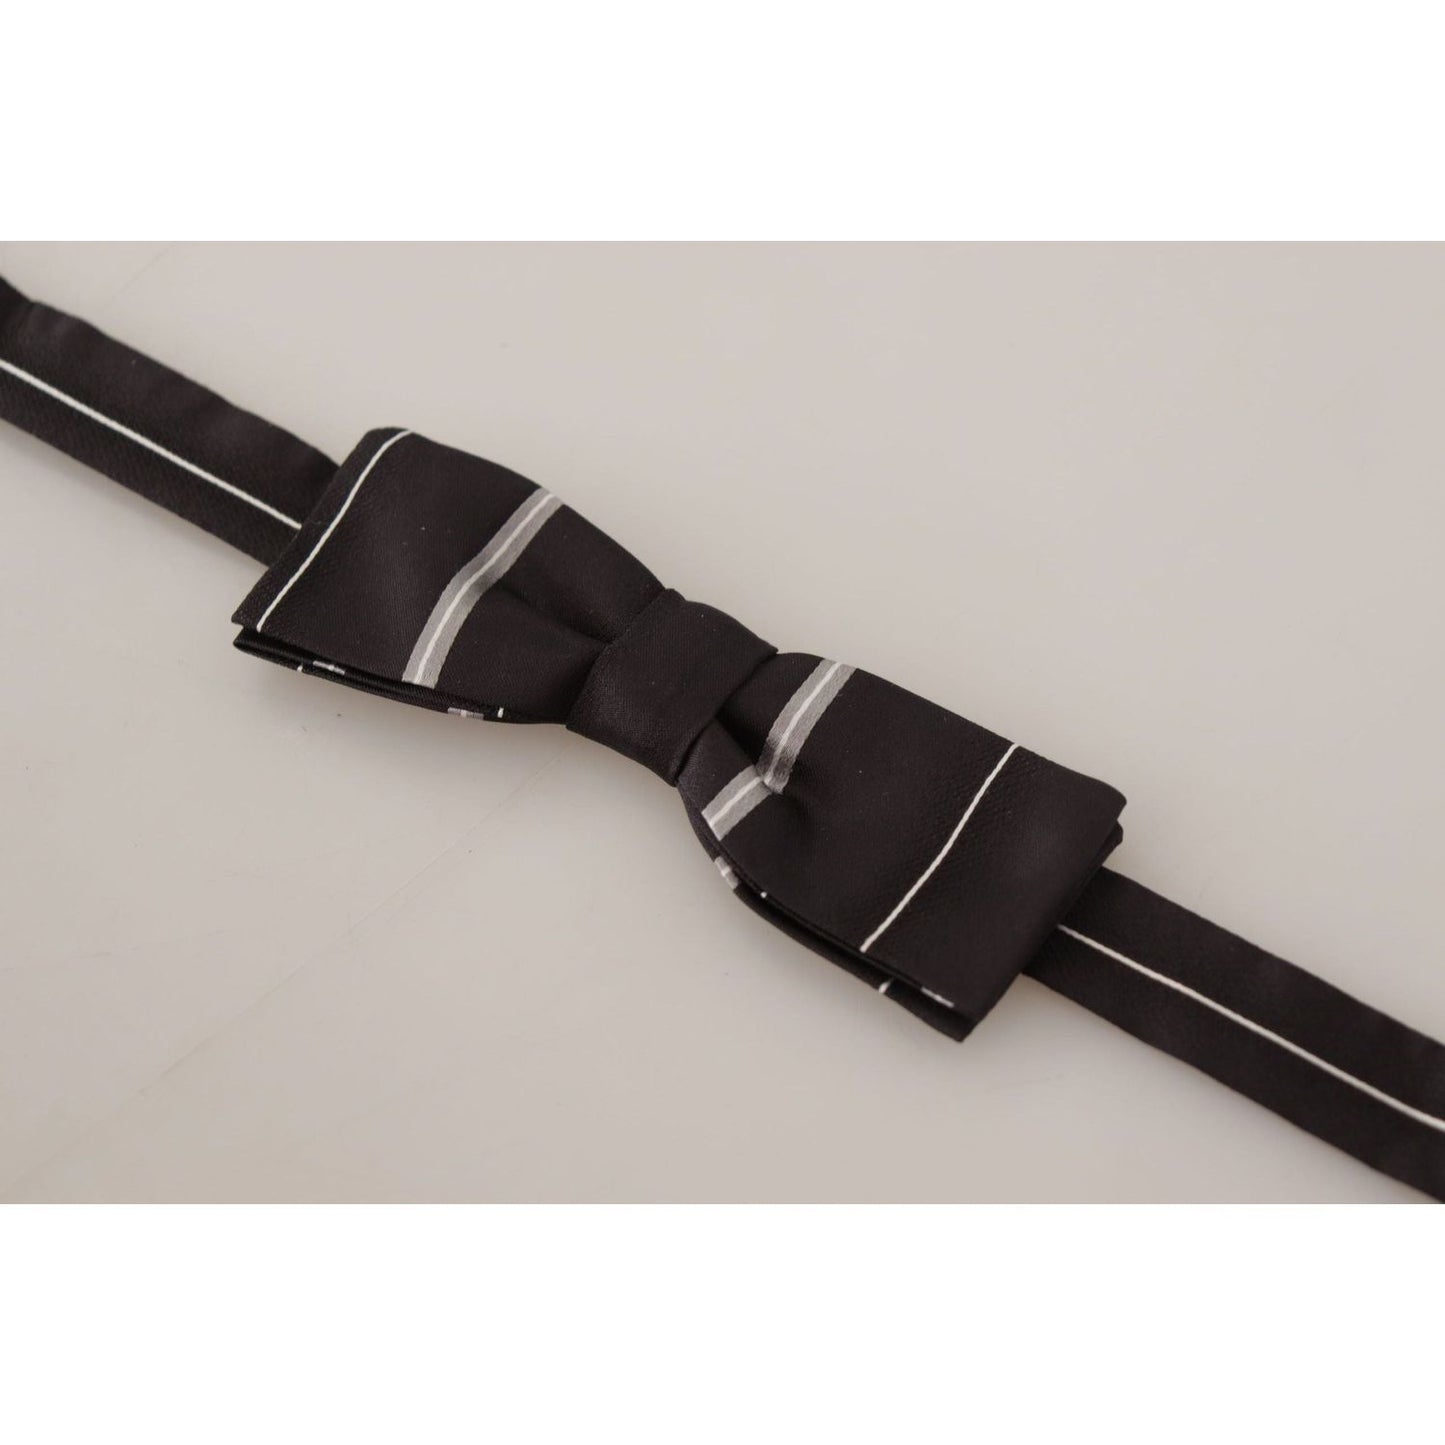 Elegant Silk Bow Tie in Black and Grey